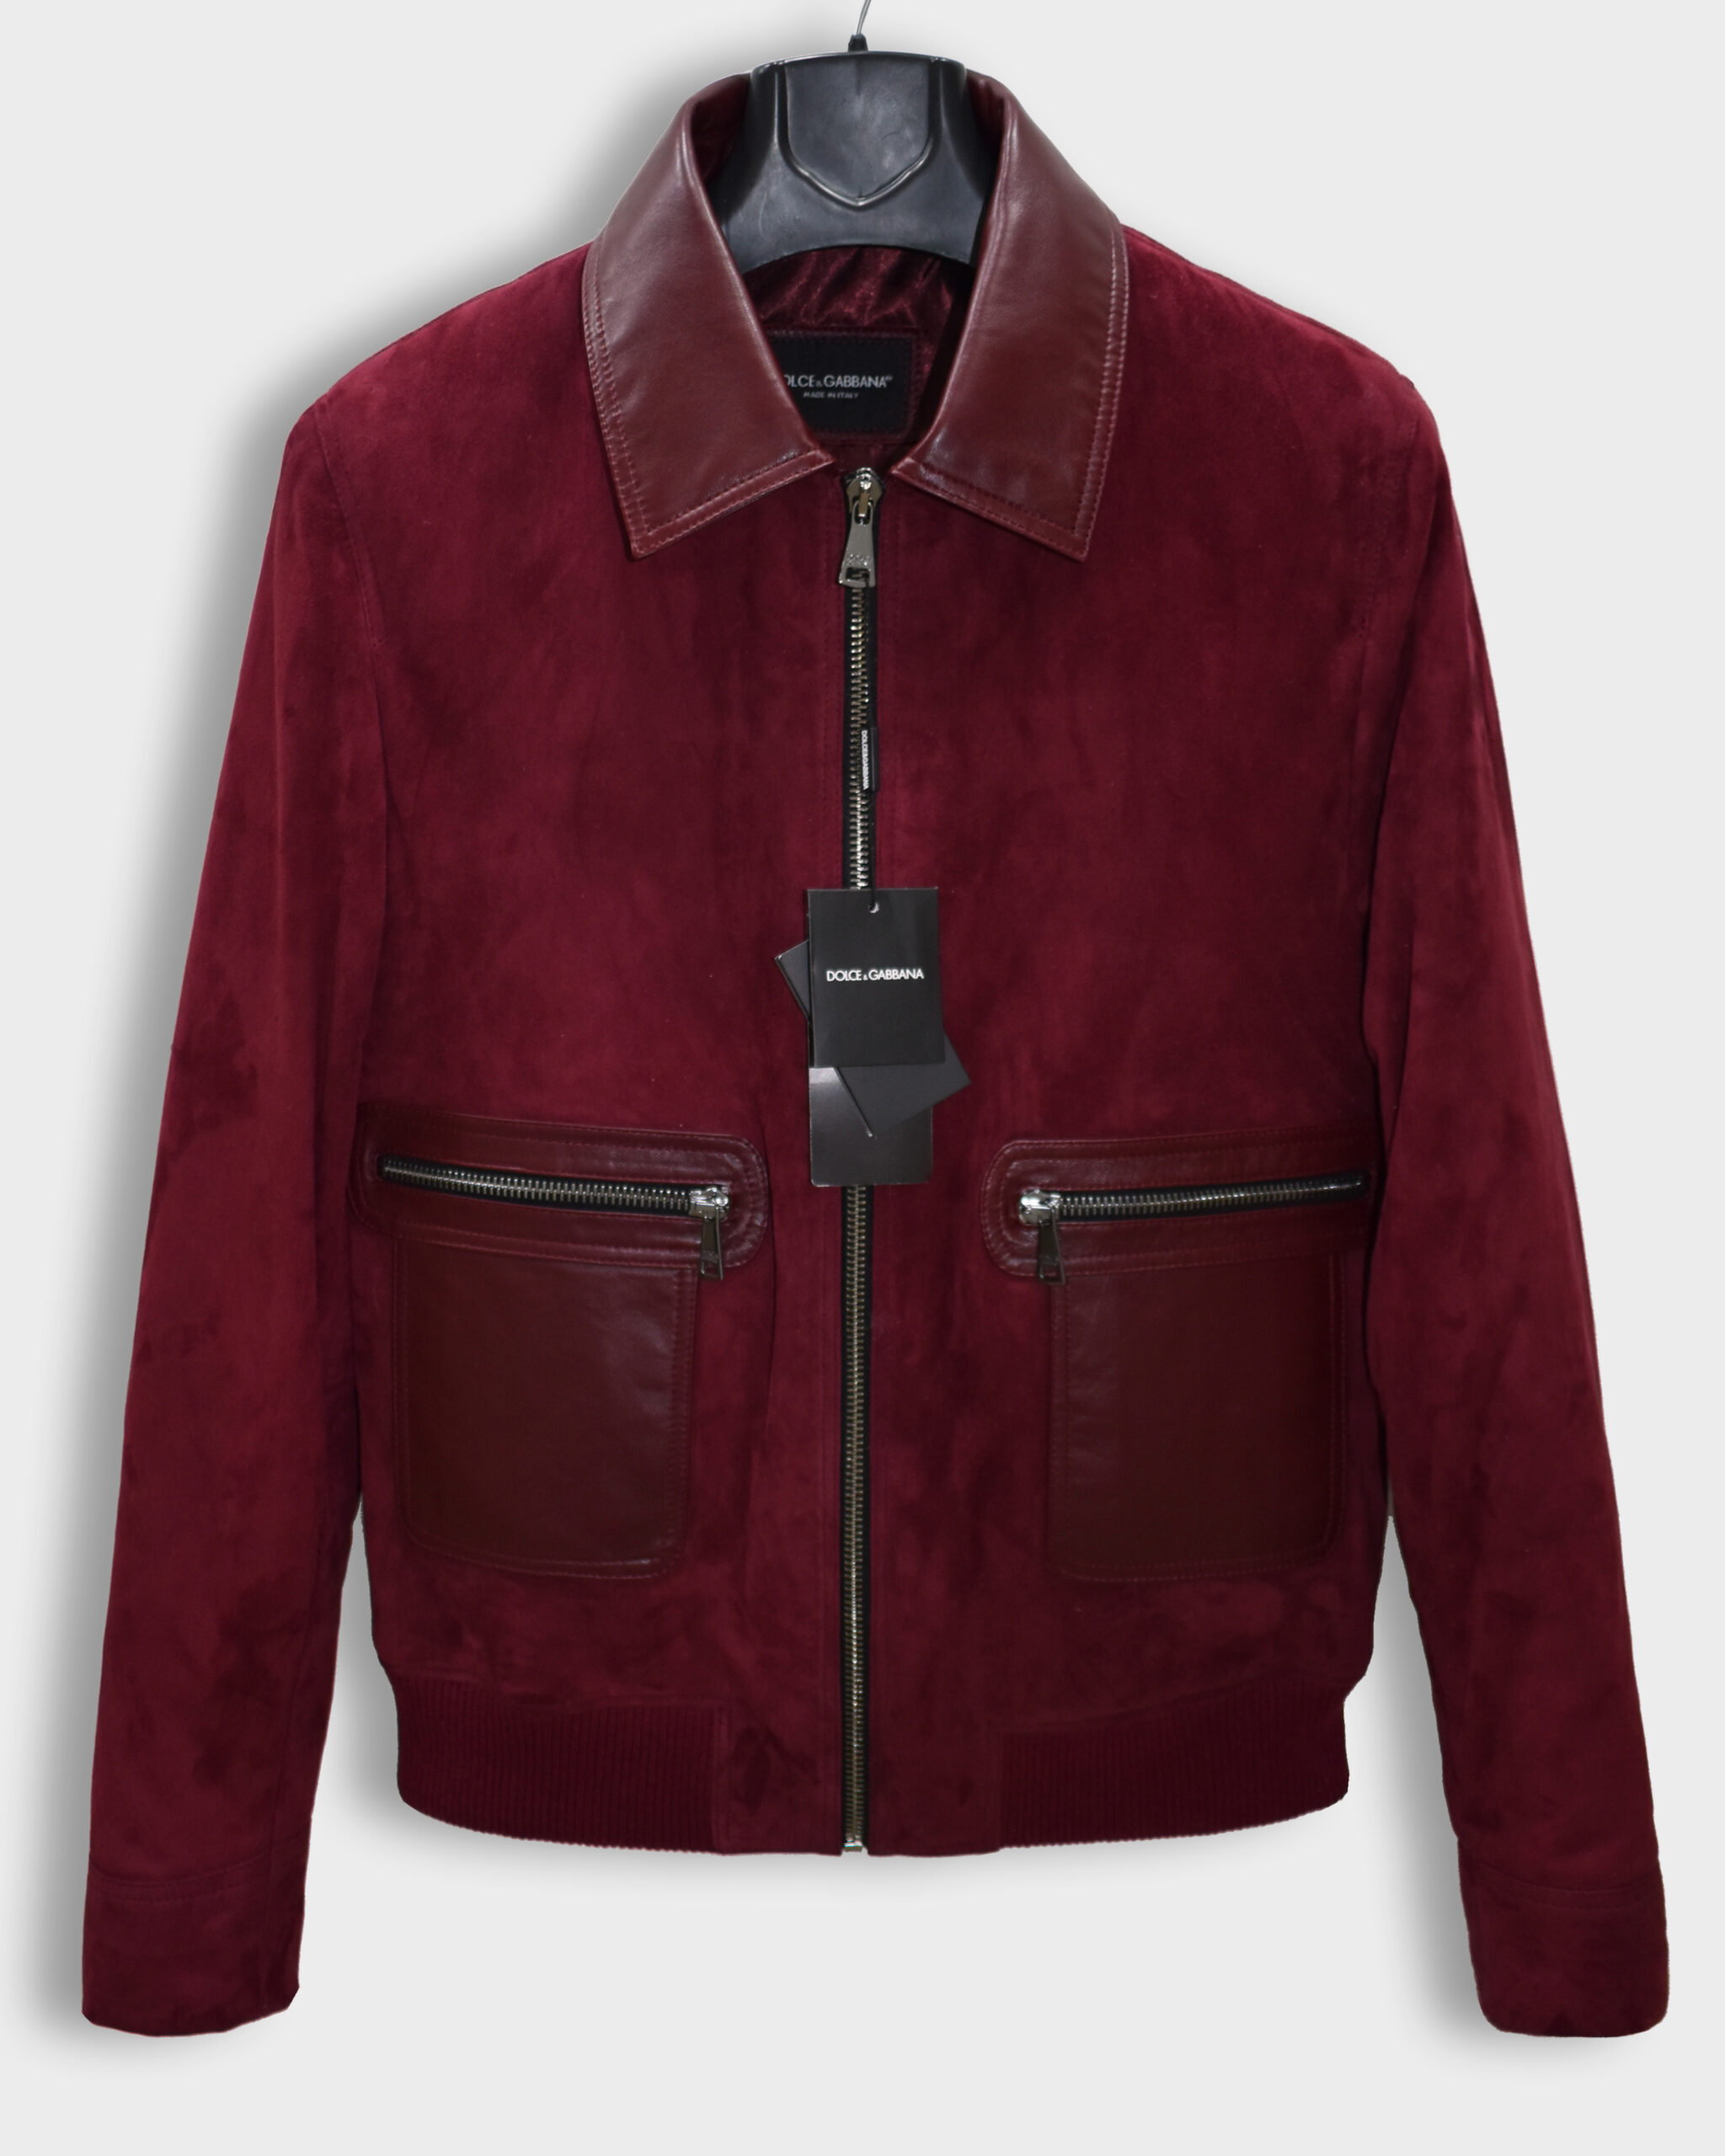 Dolce Gabbana Burgundy Suede Jacket - Leather Guys